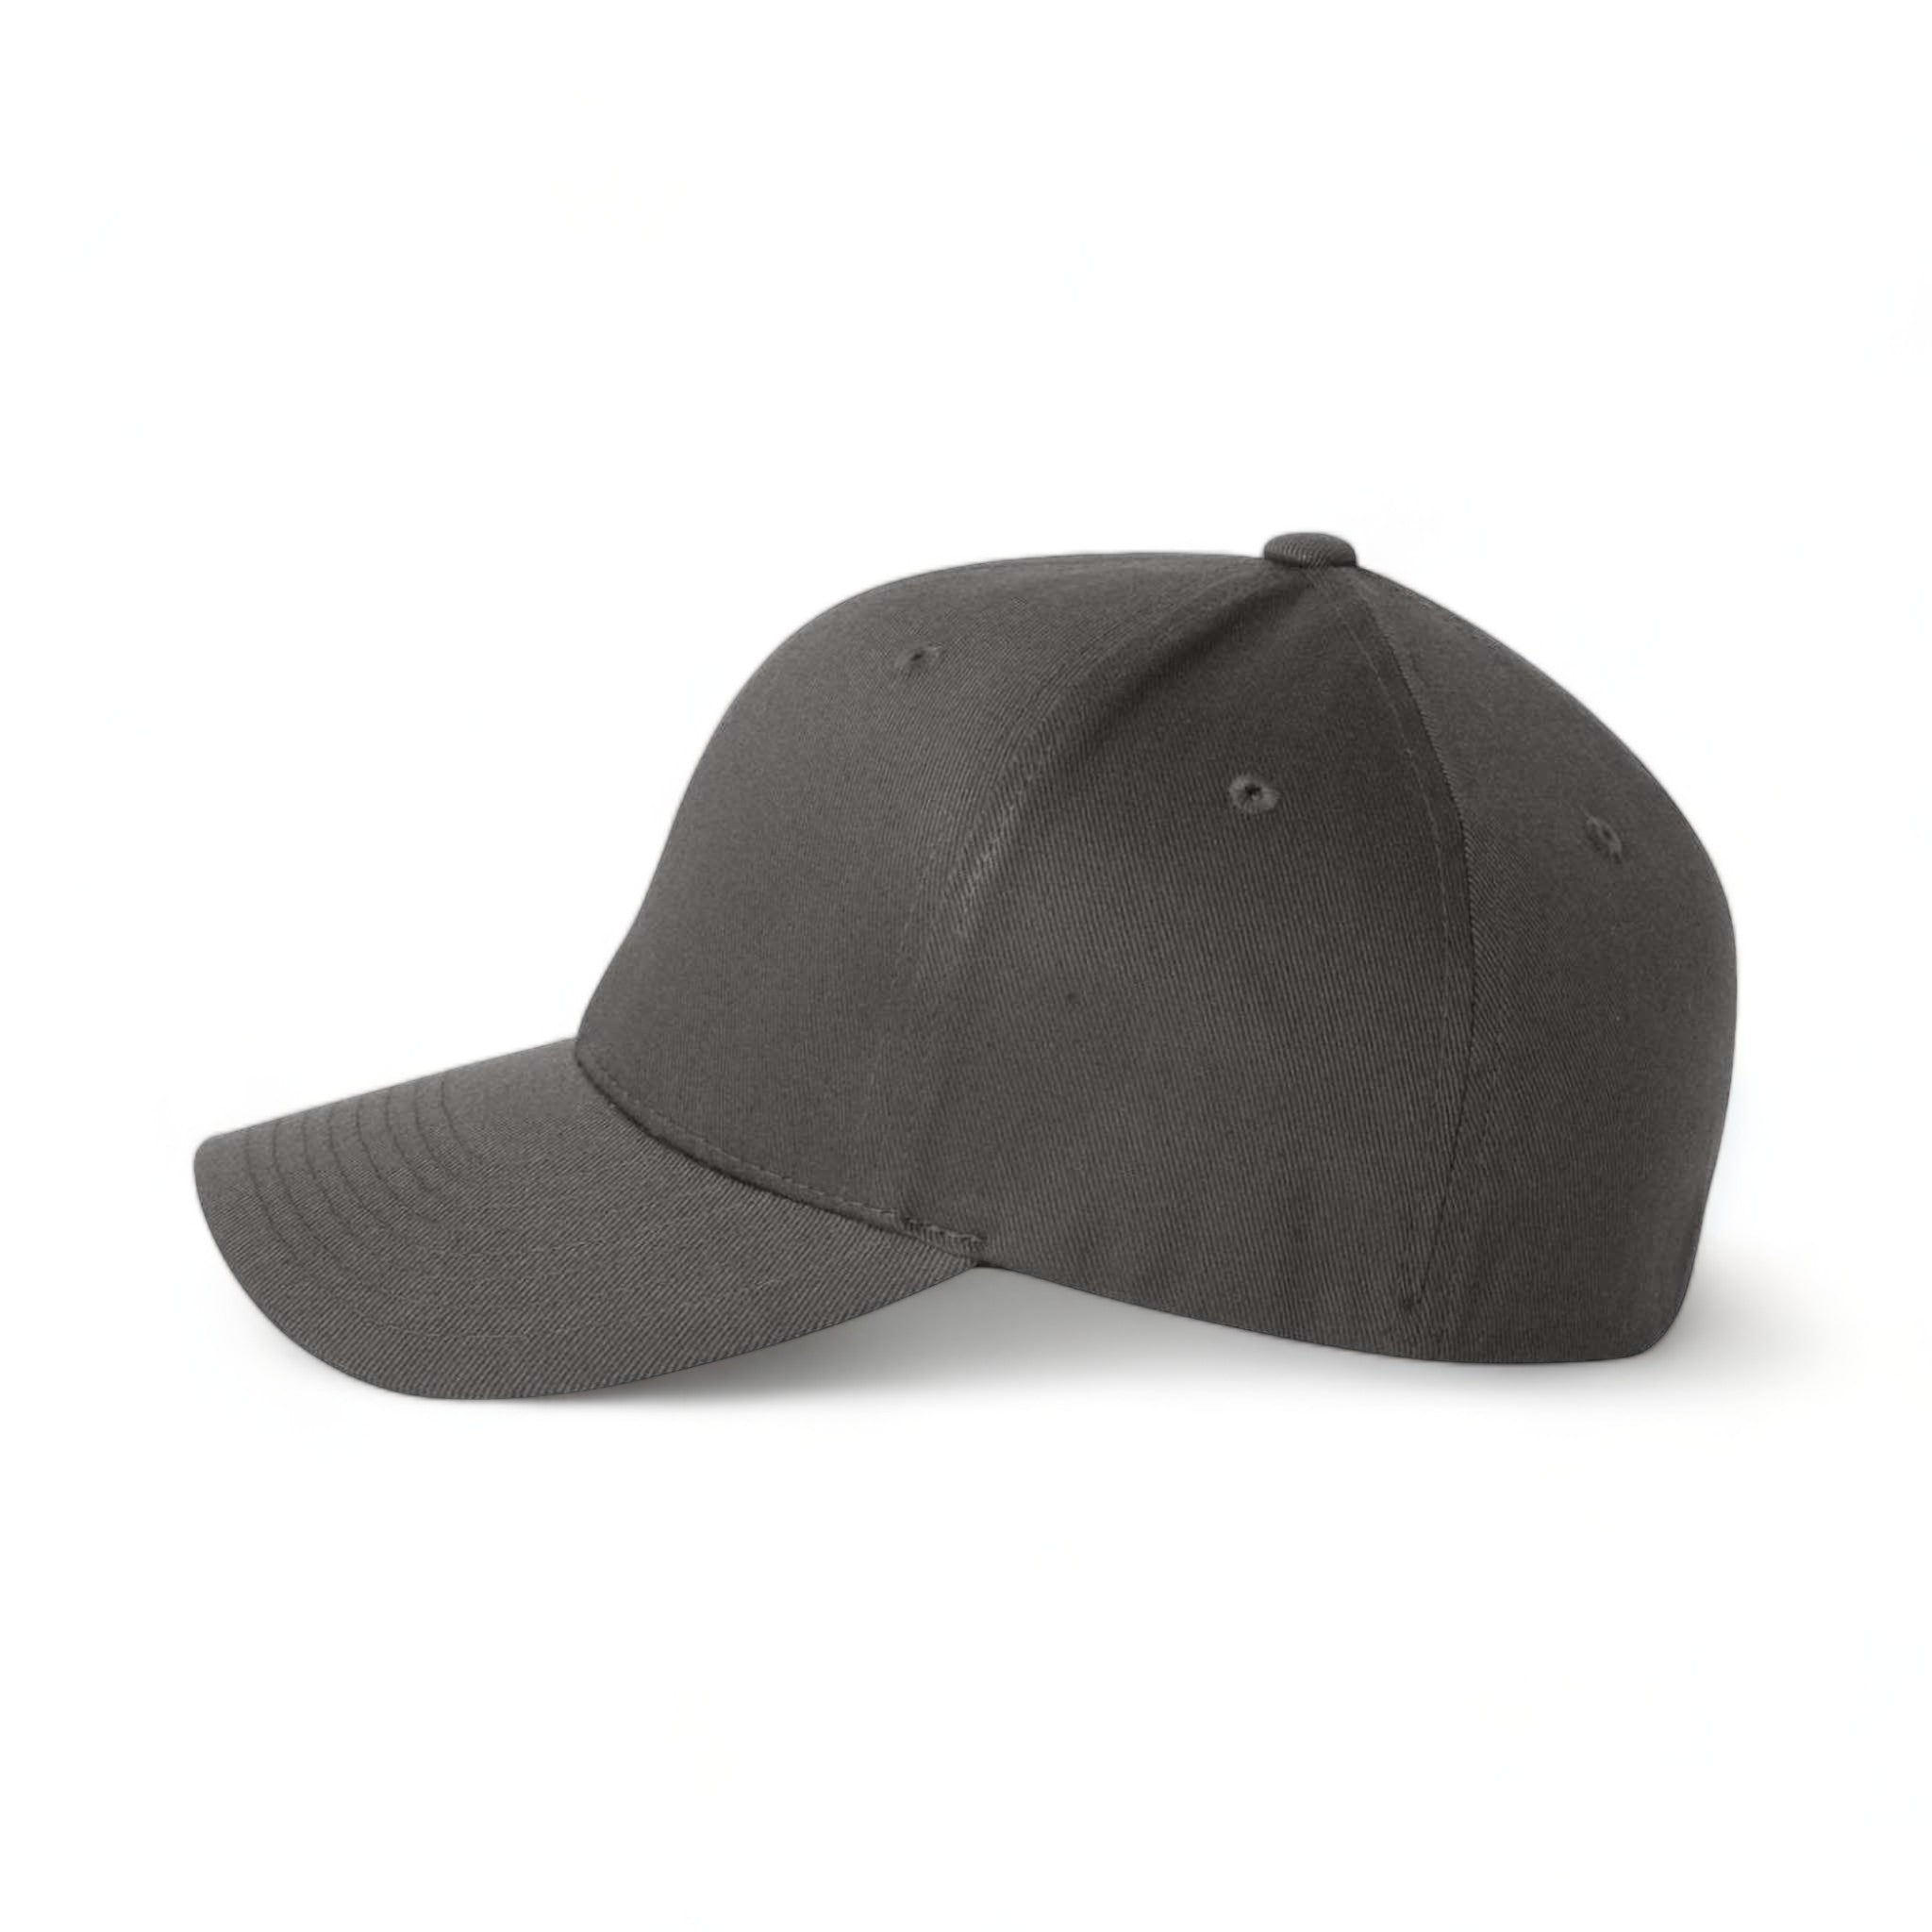 Side view of Flexfit 6277 custom hat in dark grey